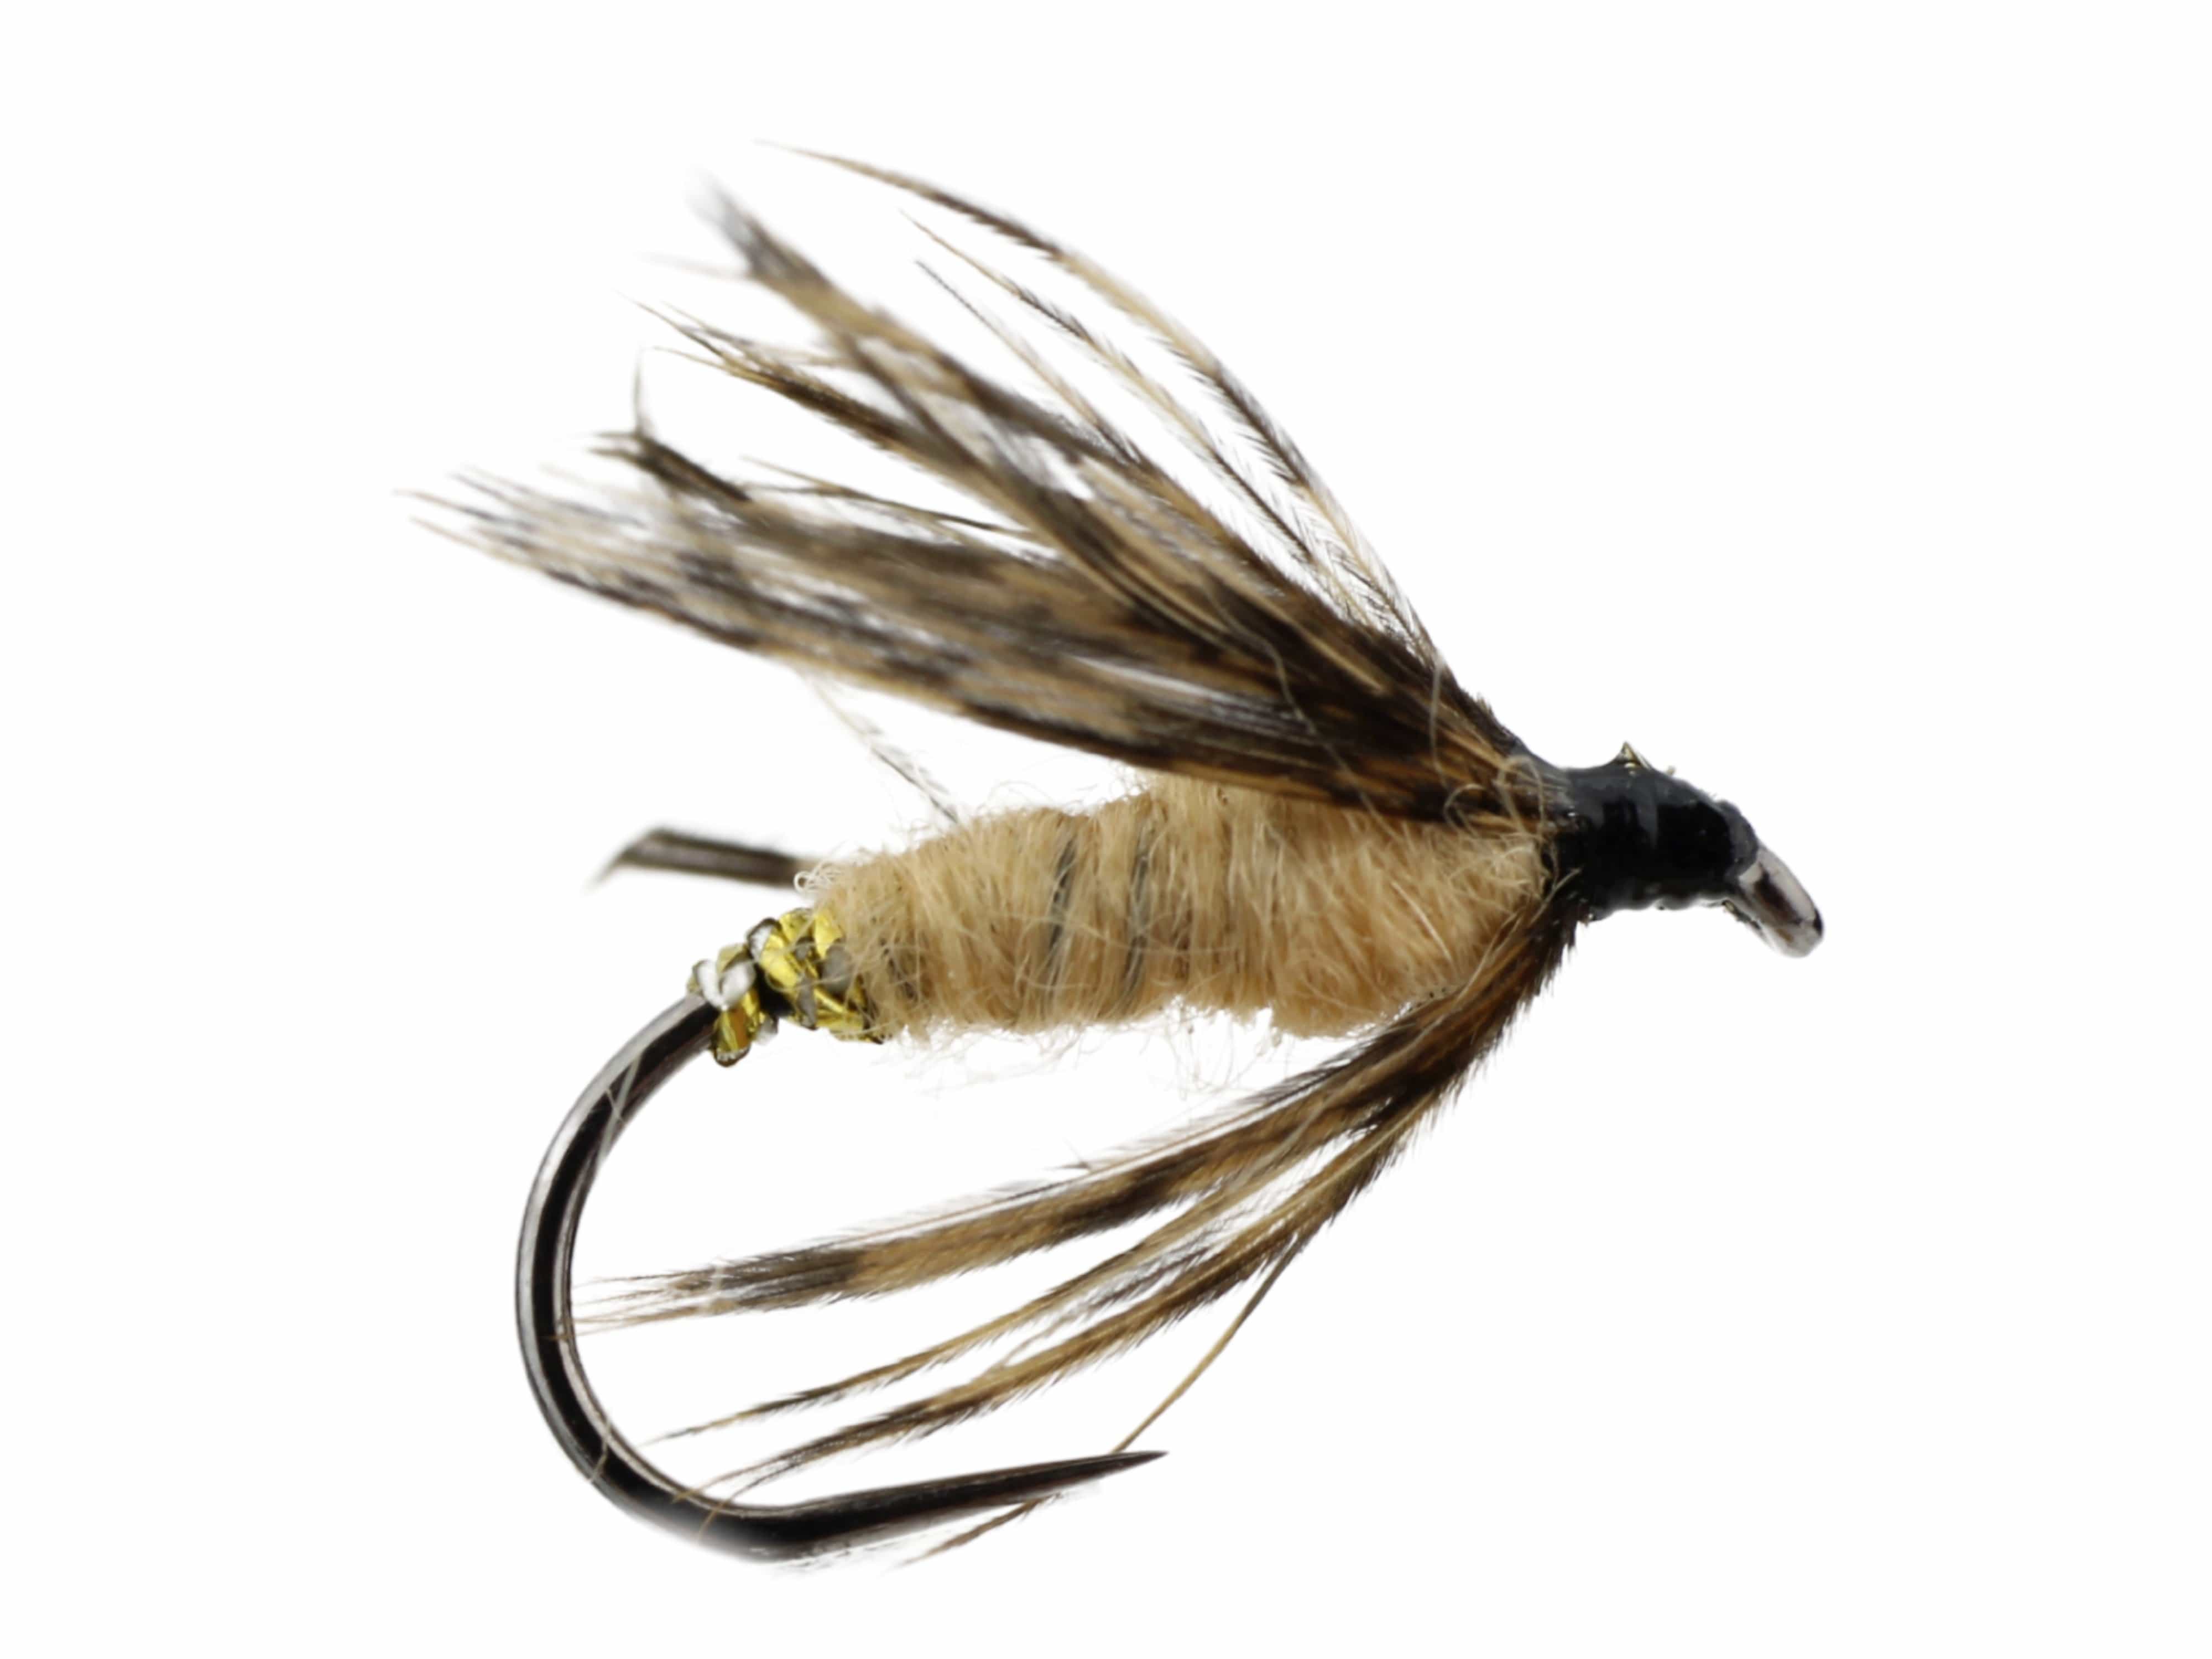 Wild Water Fly Fishing Tan Killer Kebari Tenkara Fly, size 12, qty. 6